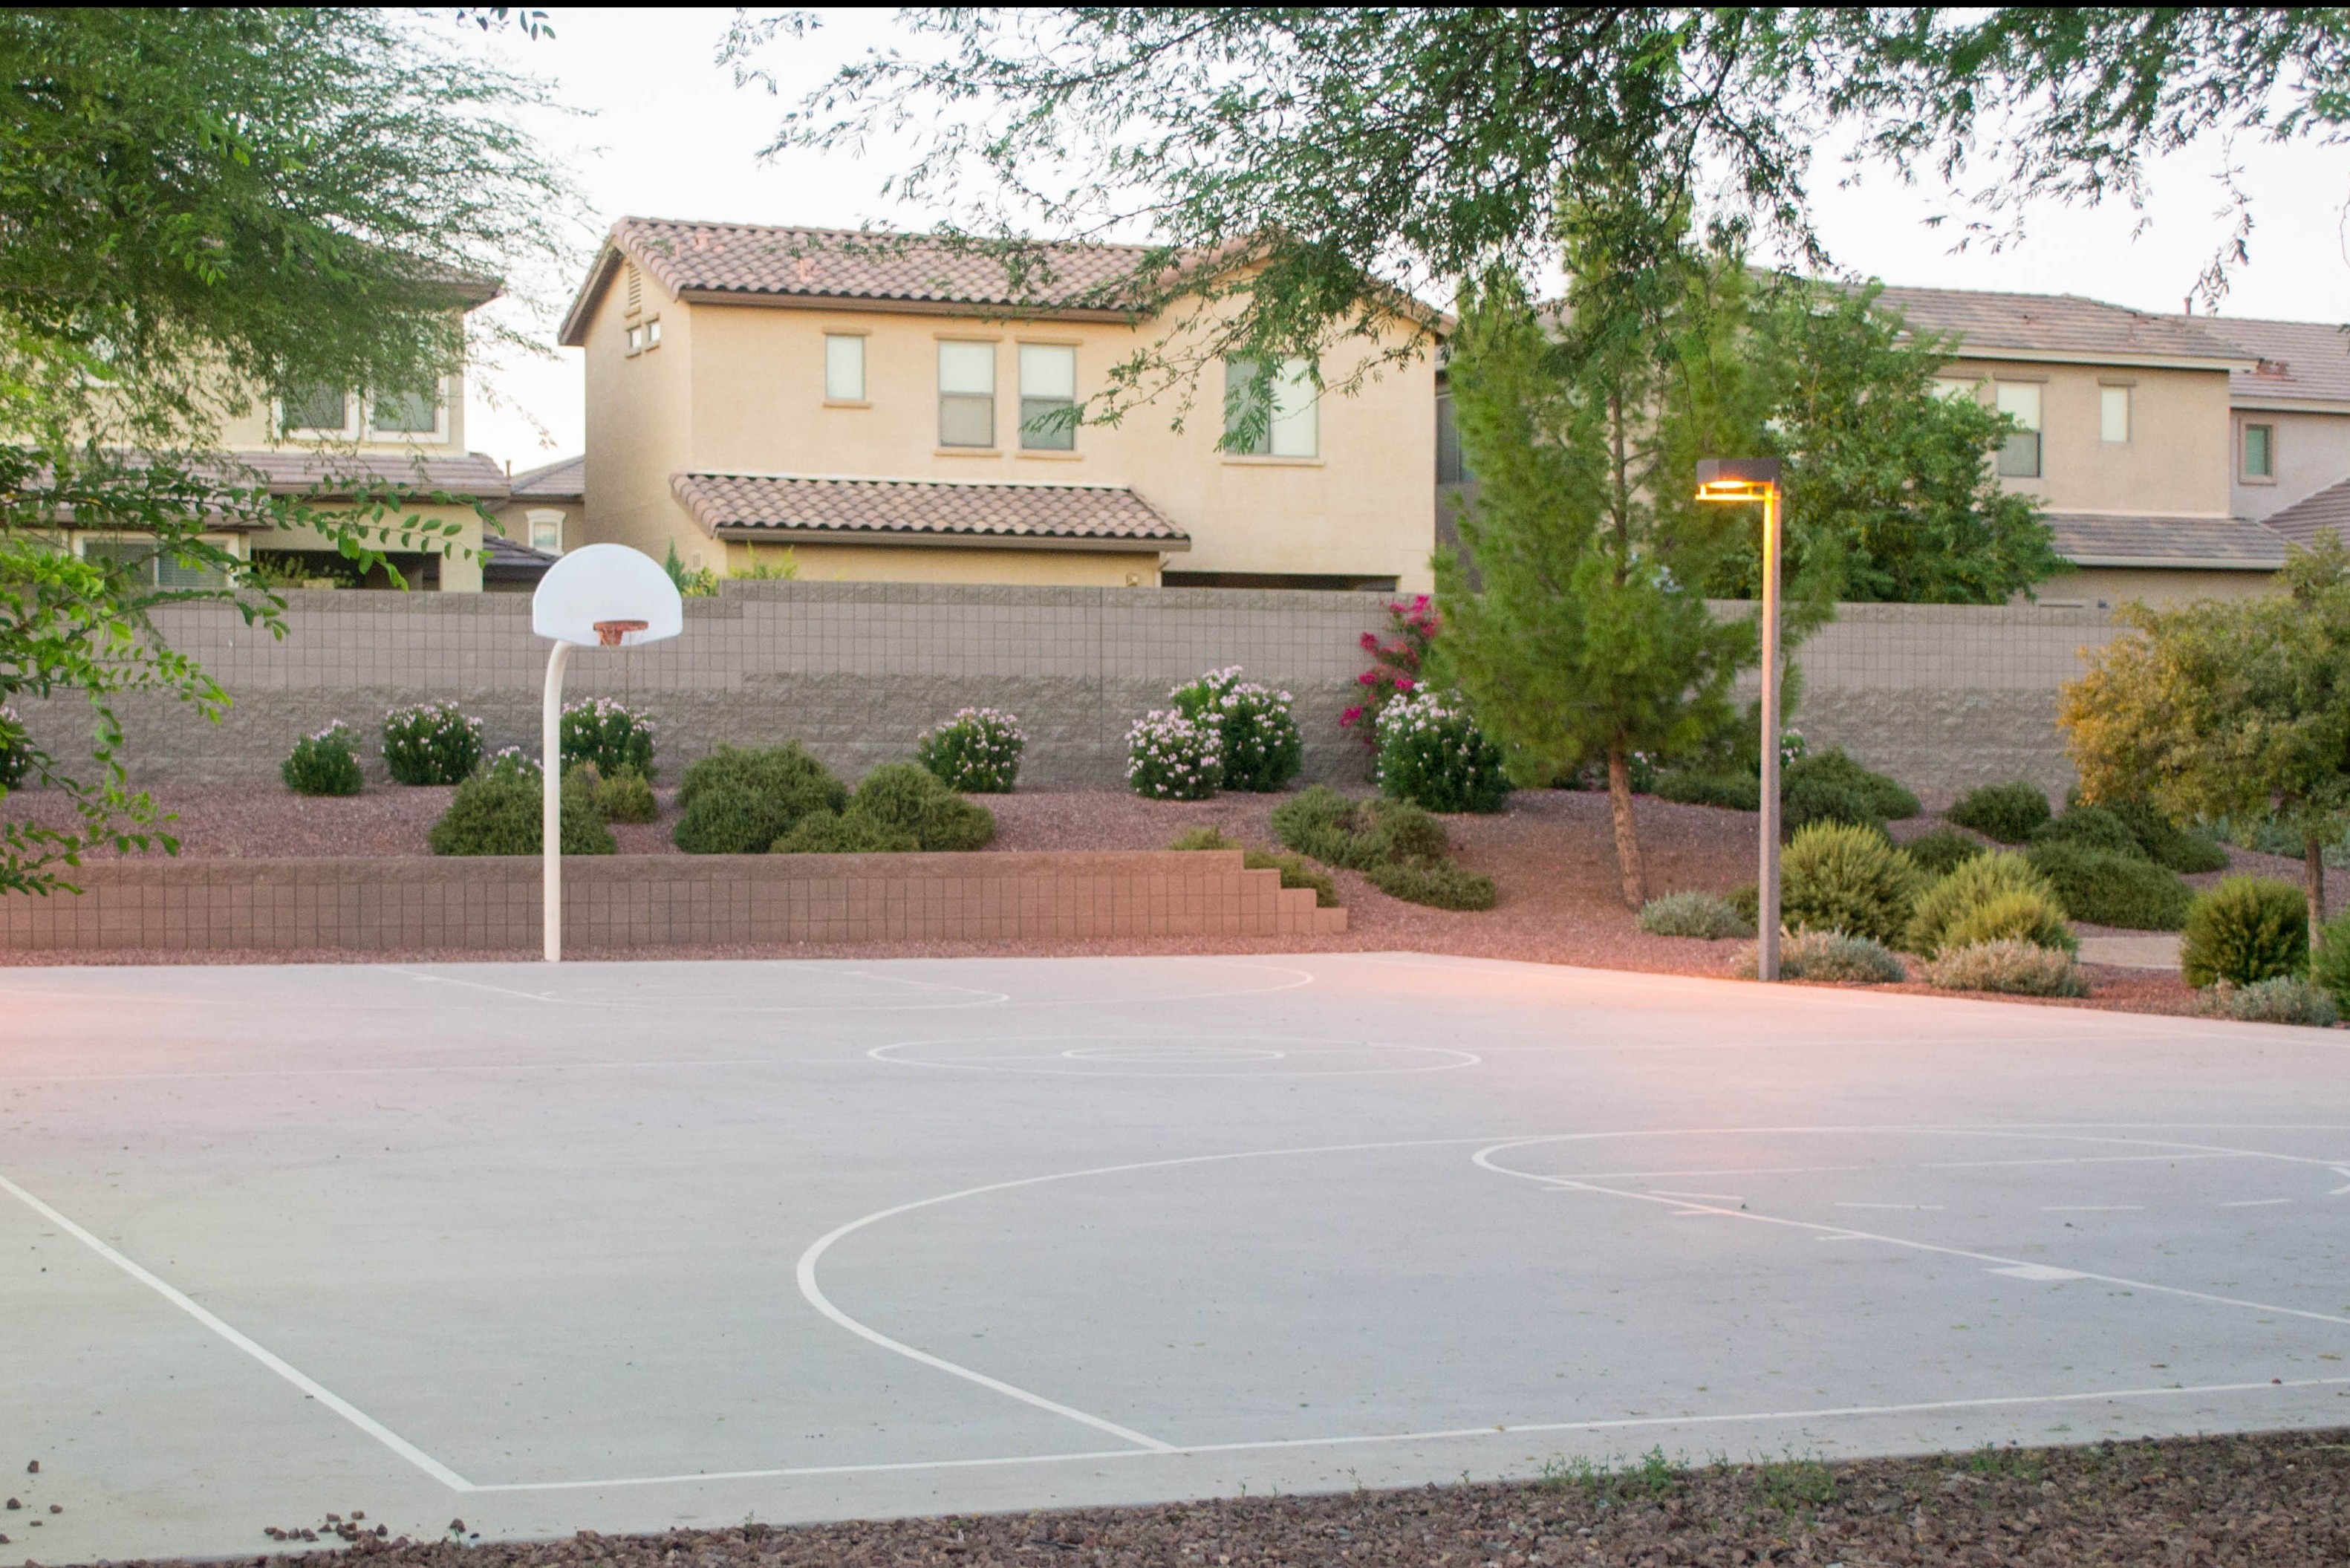 Lighted Basketball Court